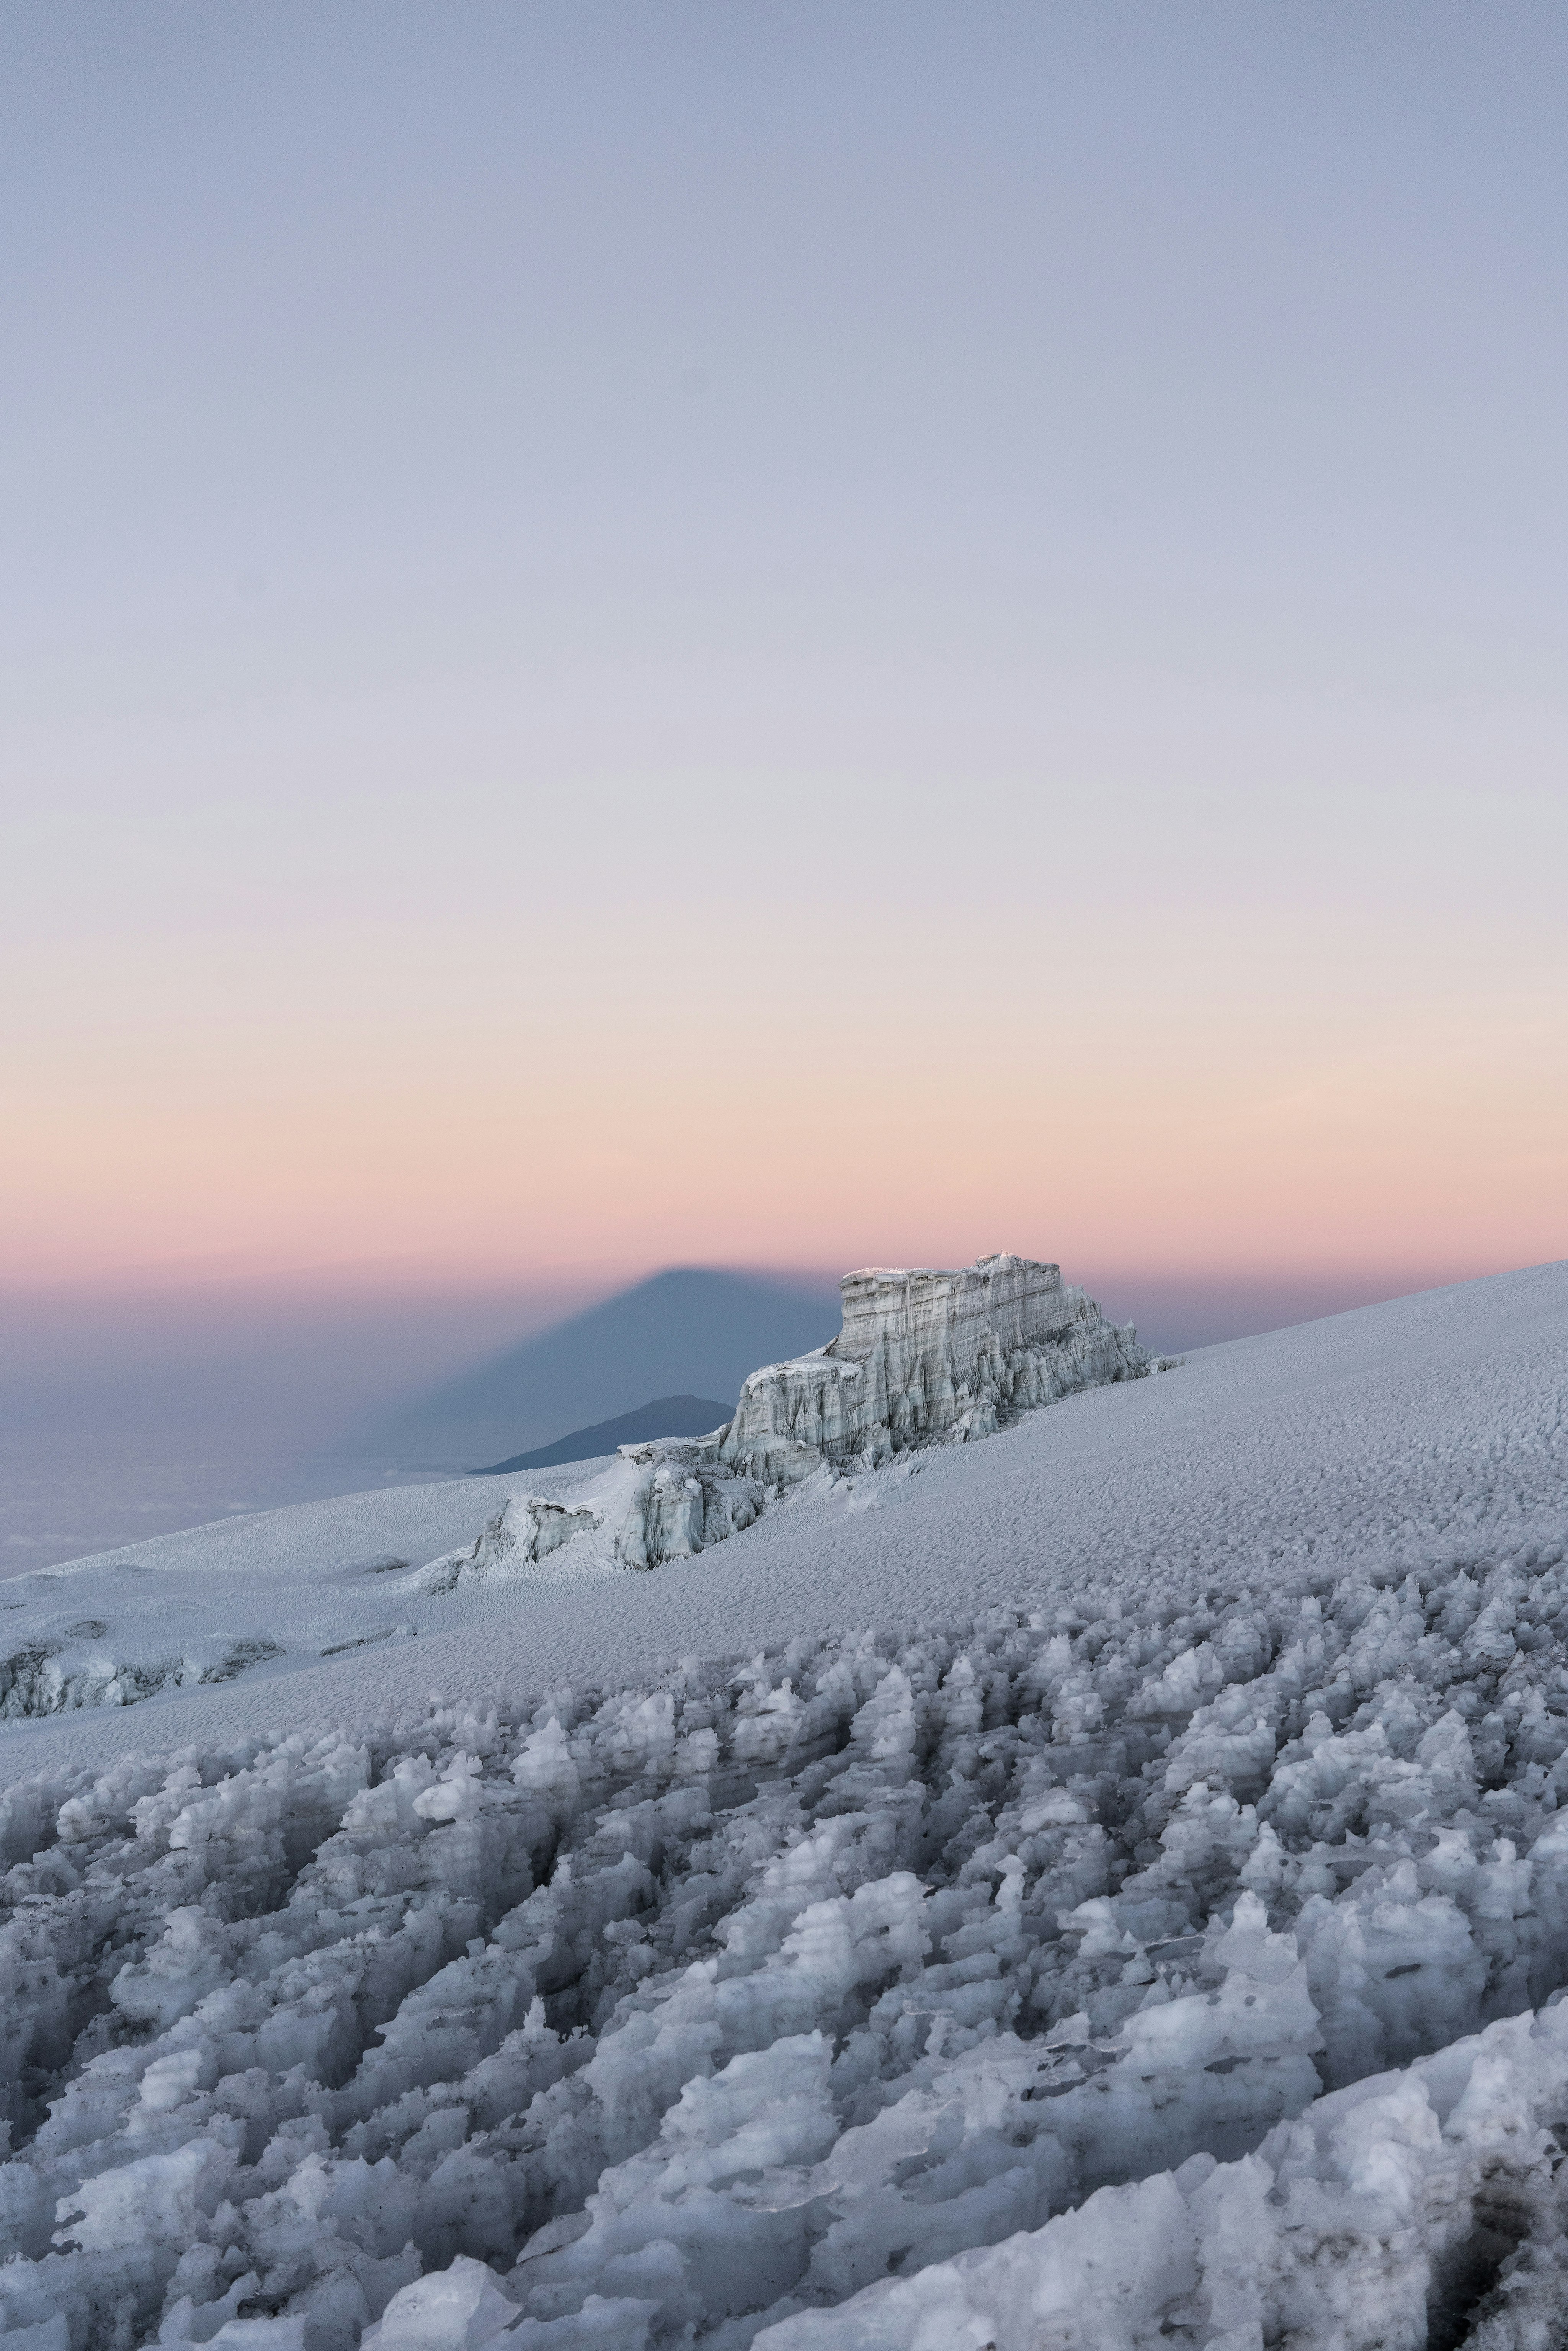 Mountain panorama in winter